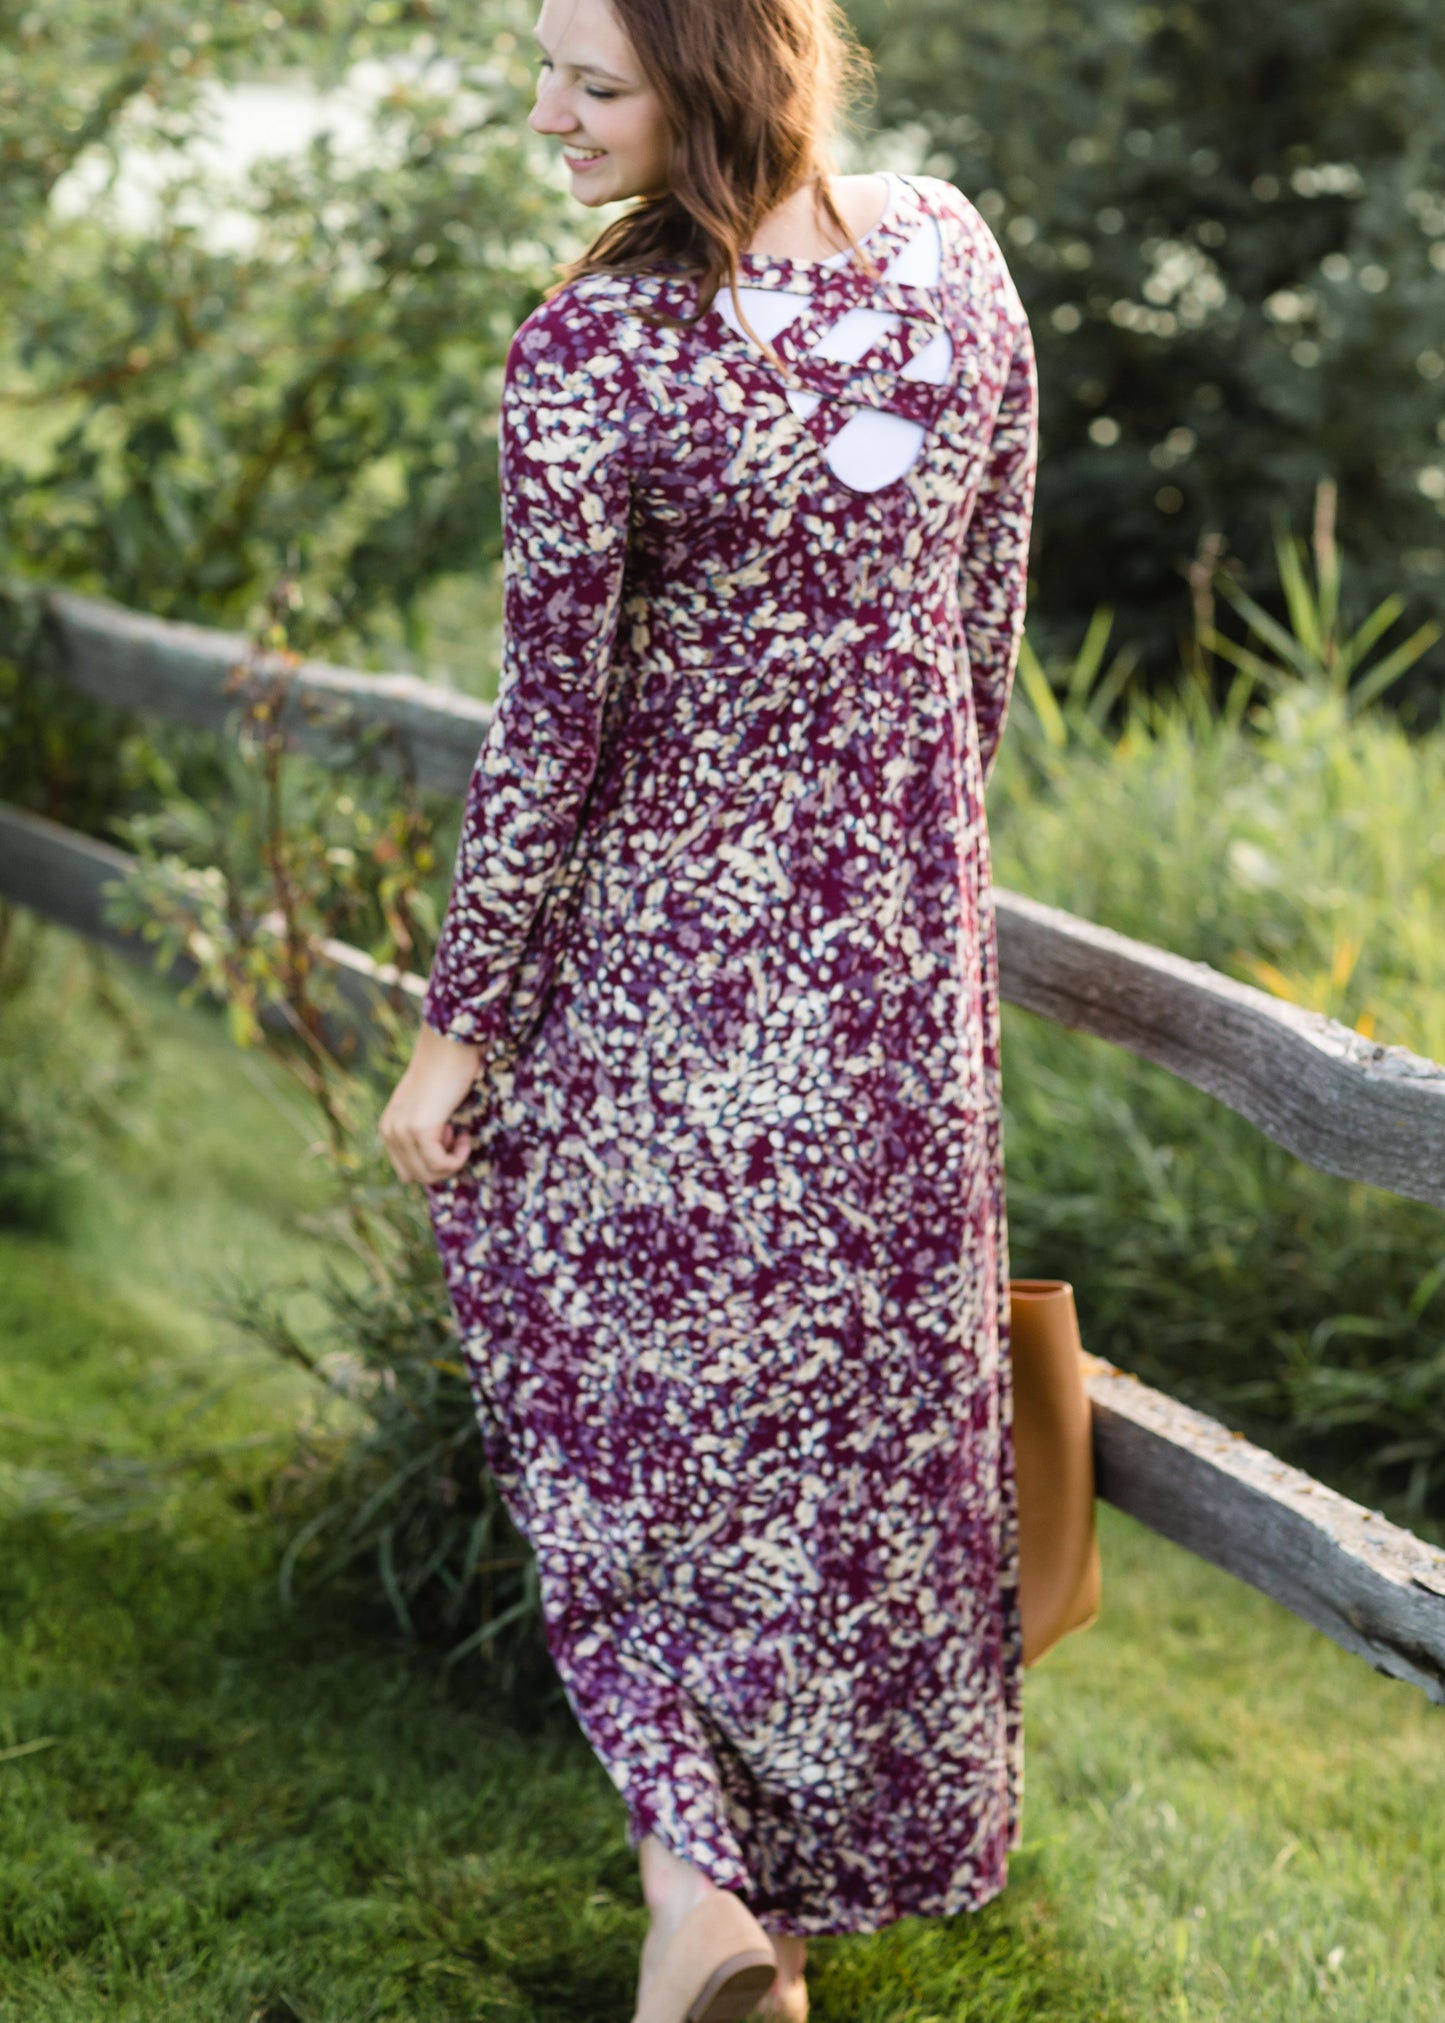 Burgundy Ditsy Print Floral Maxi Dress - FINAL SALE Dresses